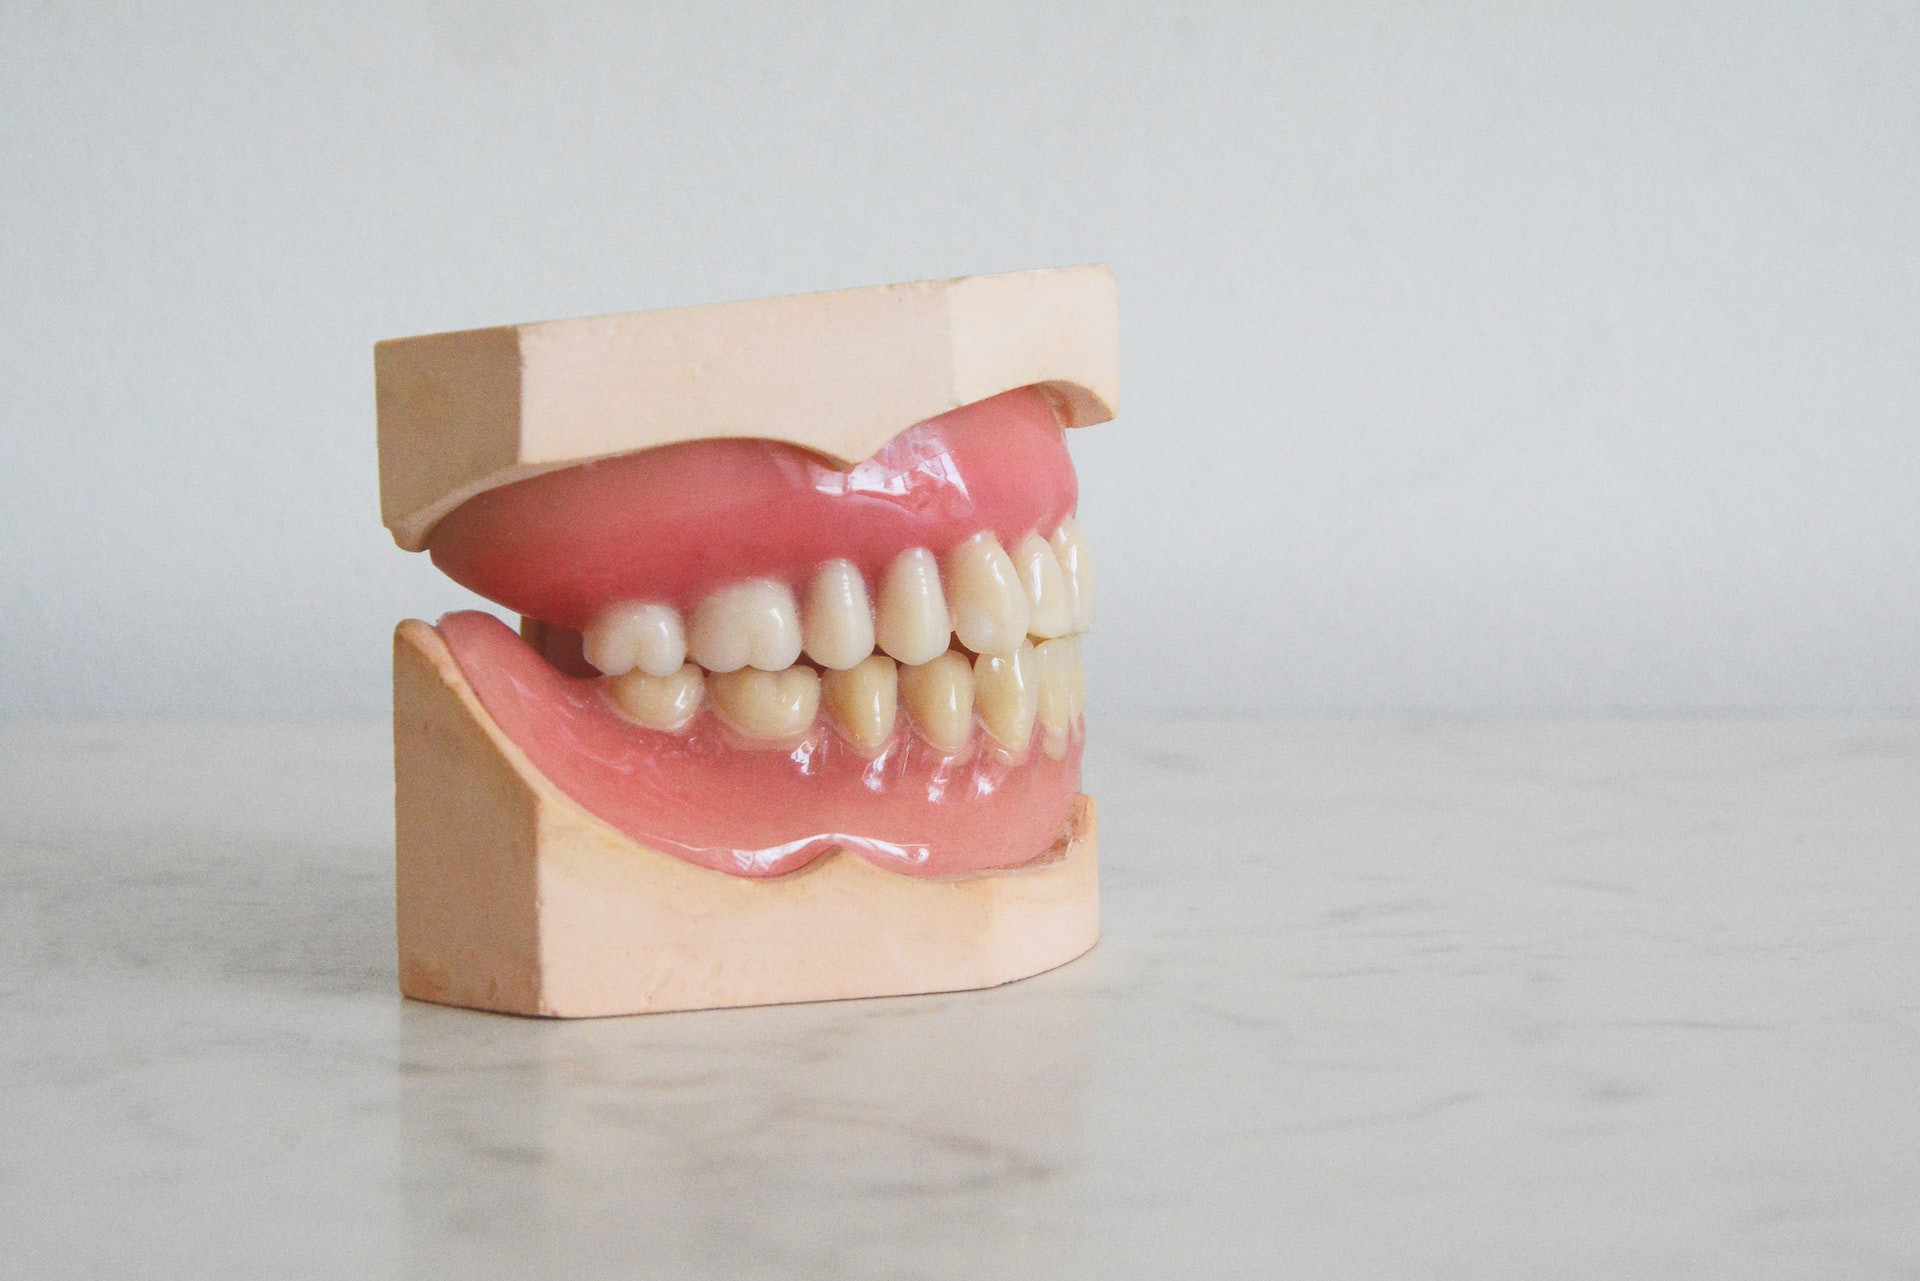 set of new dentures sitting on countertop